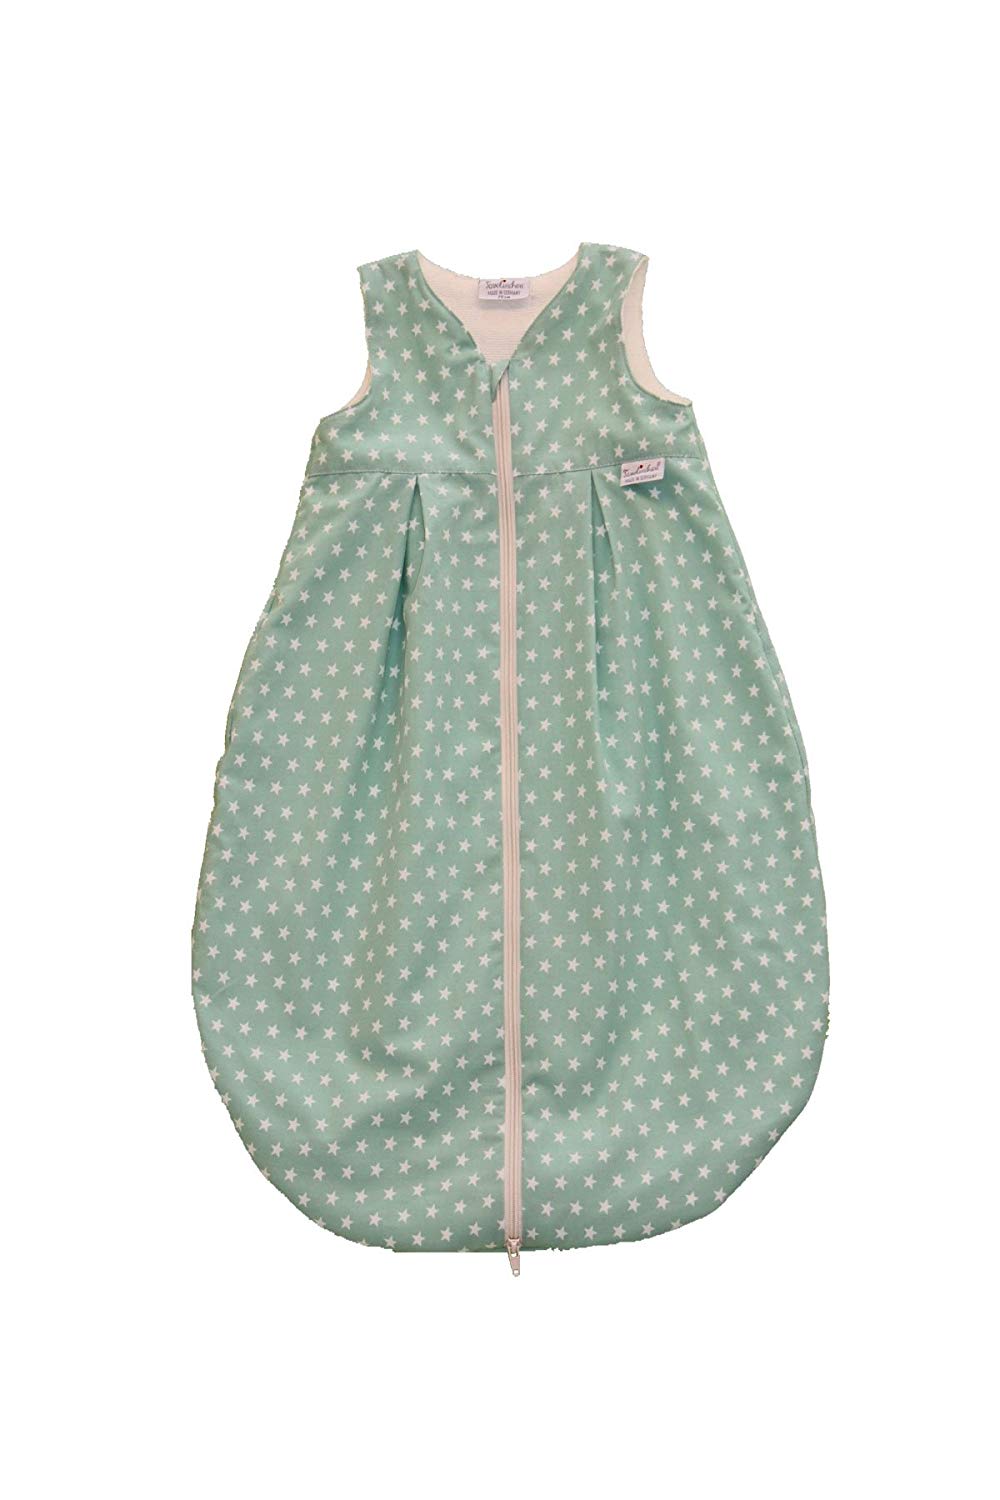 Tavolinchen Baby Terry Sleeping Bag \'Star\' Children\'s Sleeping Bag 110 cm Green